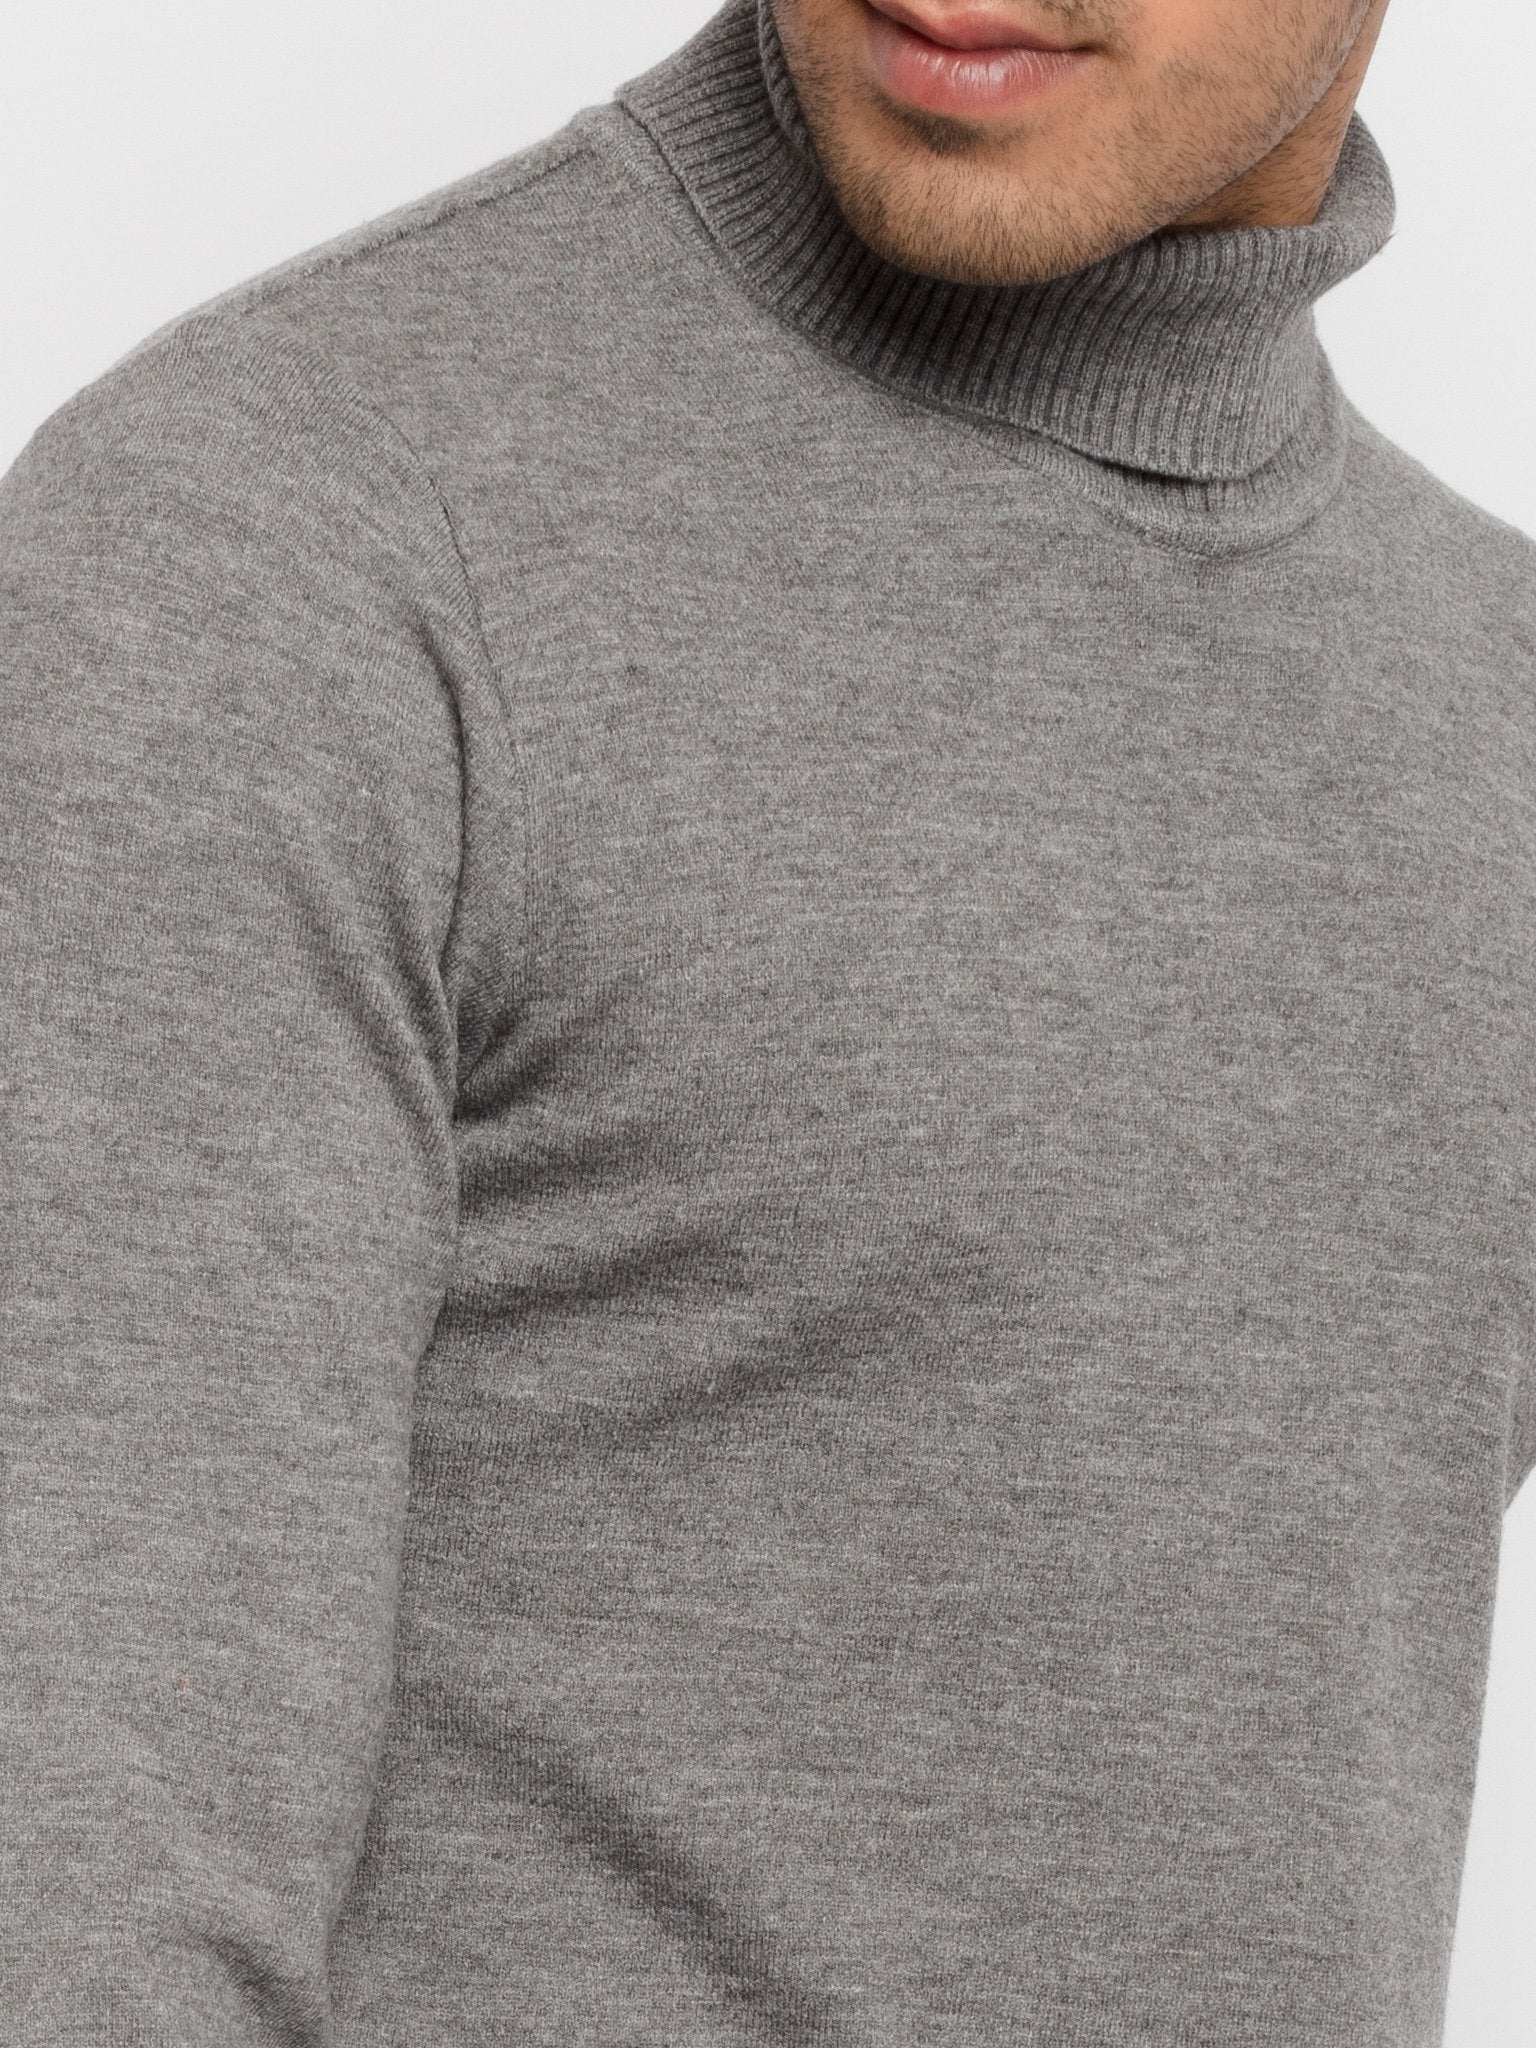 Status Quo | Men's Grey Polycotton Melange Sweaters 6